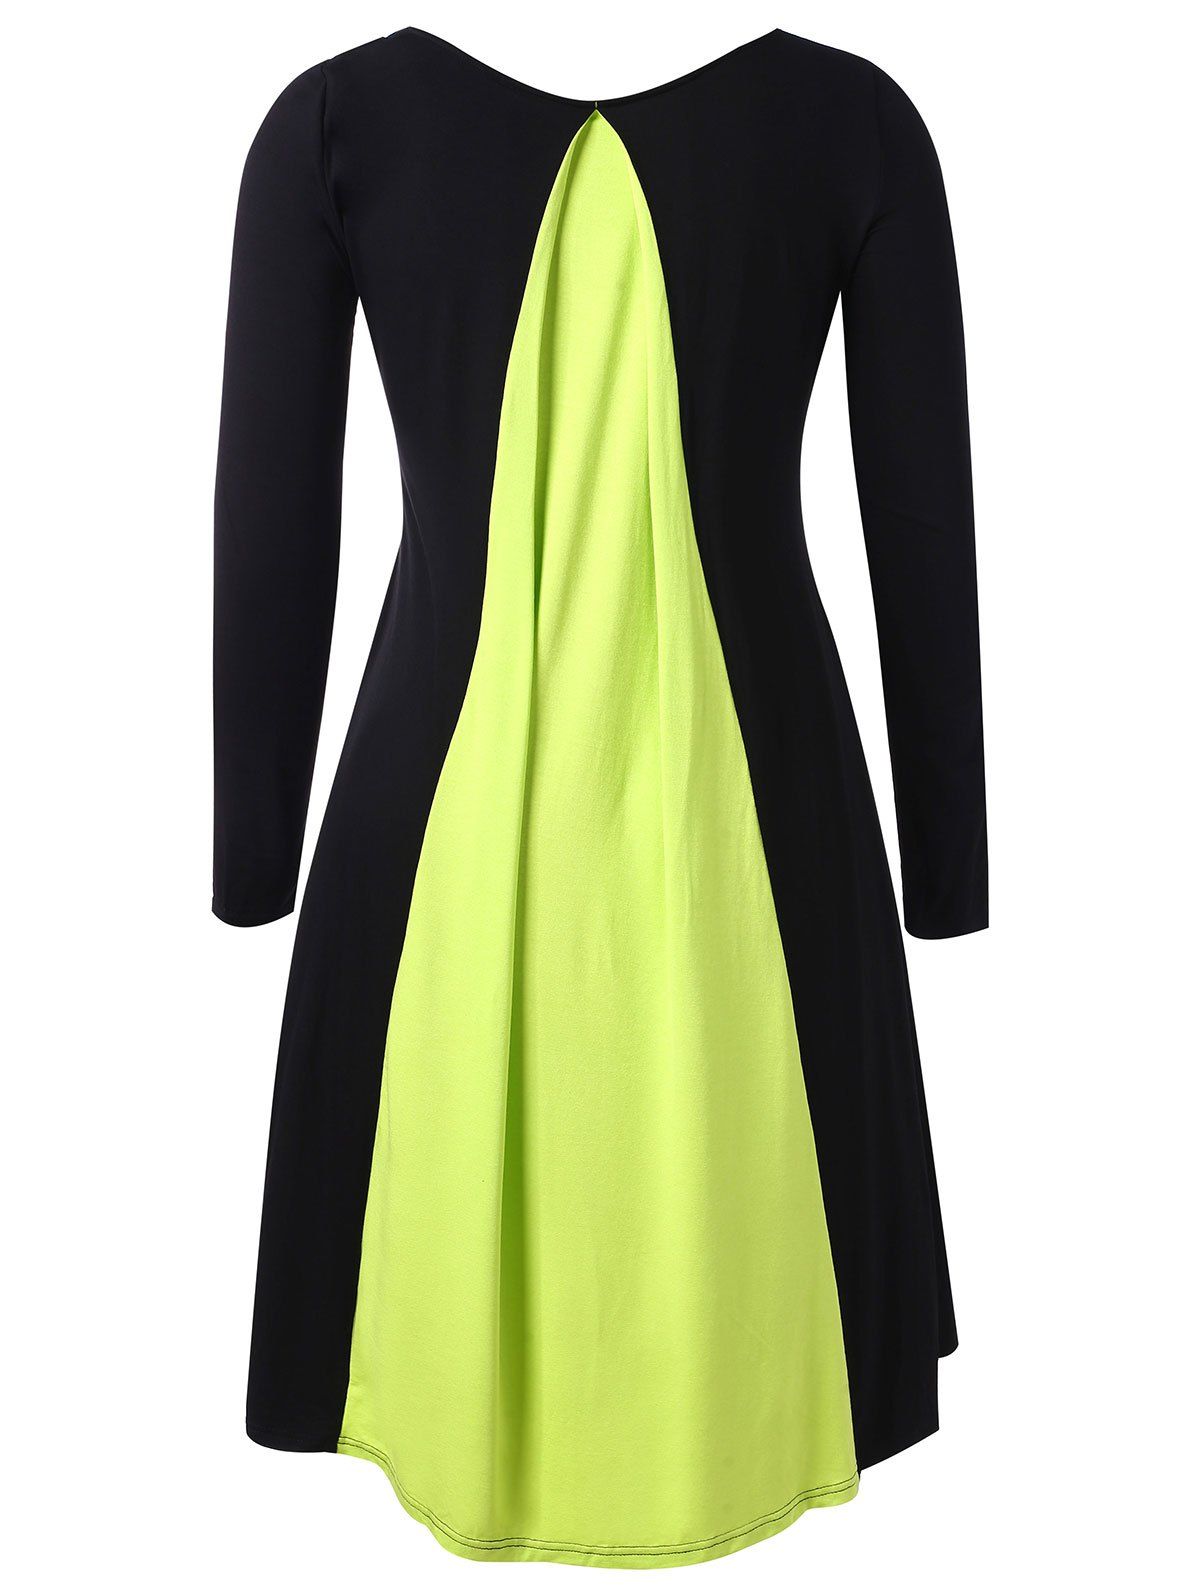 Contrast Color Block Long Sleeve Straight Knee Length Dress - multicolor XL